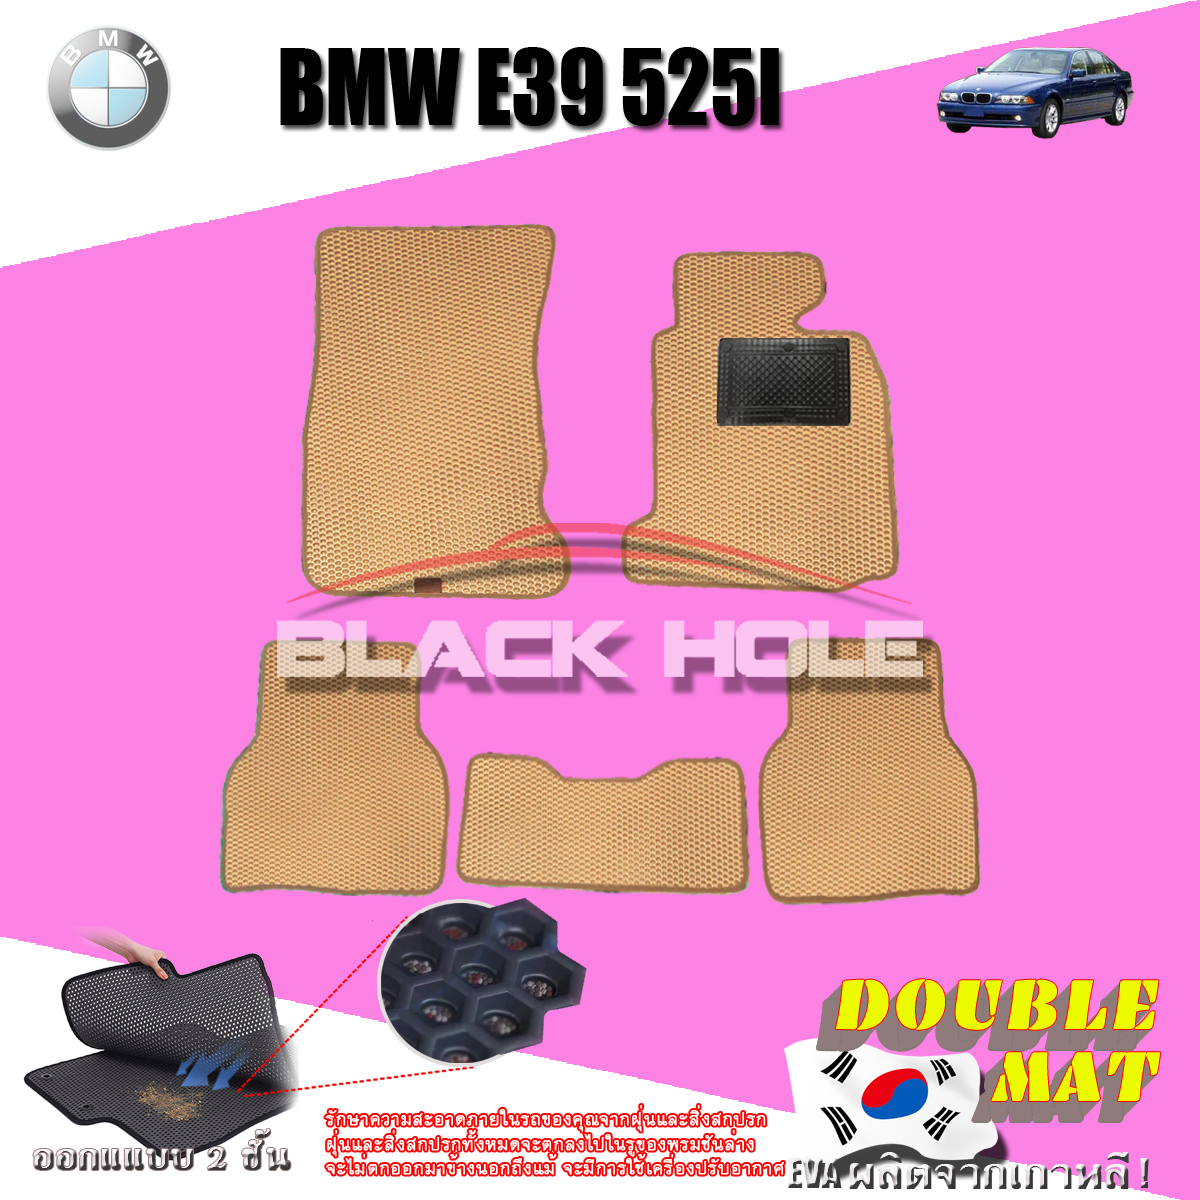 BMW E39 525i ปี 1995 - ปี 2004 พรมรถยนต์E39 พรมเข้ารูปสองชั้นแบบรูรังผึ้ง Blackhole Double Mat (ชุดห้องโดยสาร) สี SET B ( 5 Pcs. ) Beige-สีเบจขอบเดิม ( 5 ชิ้น )